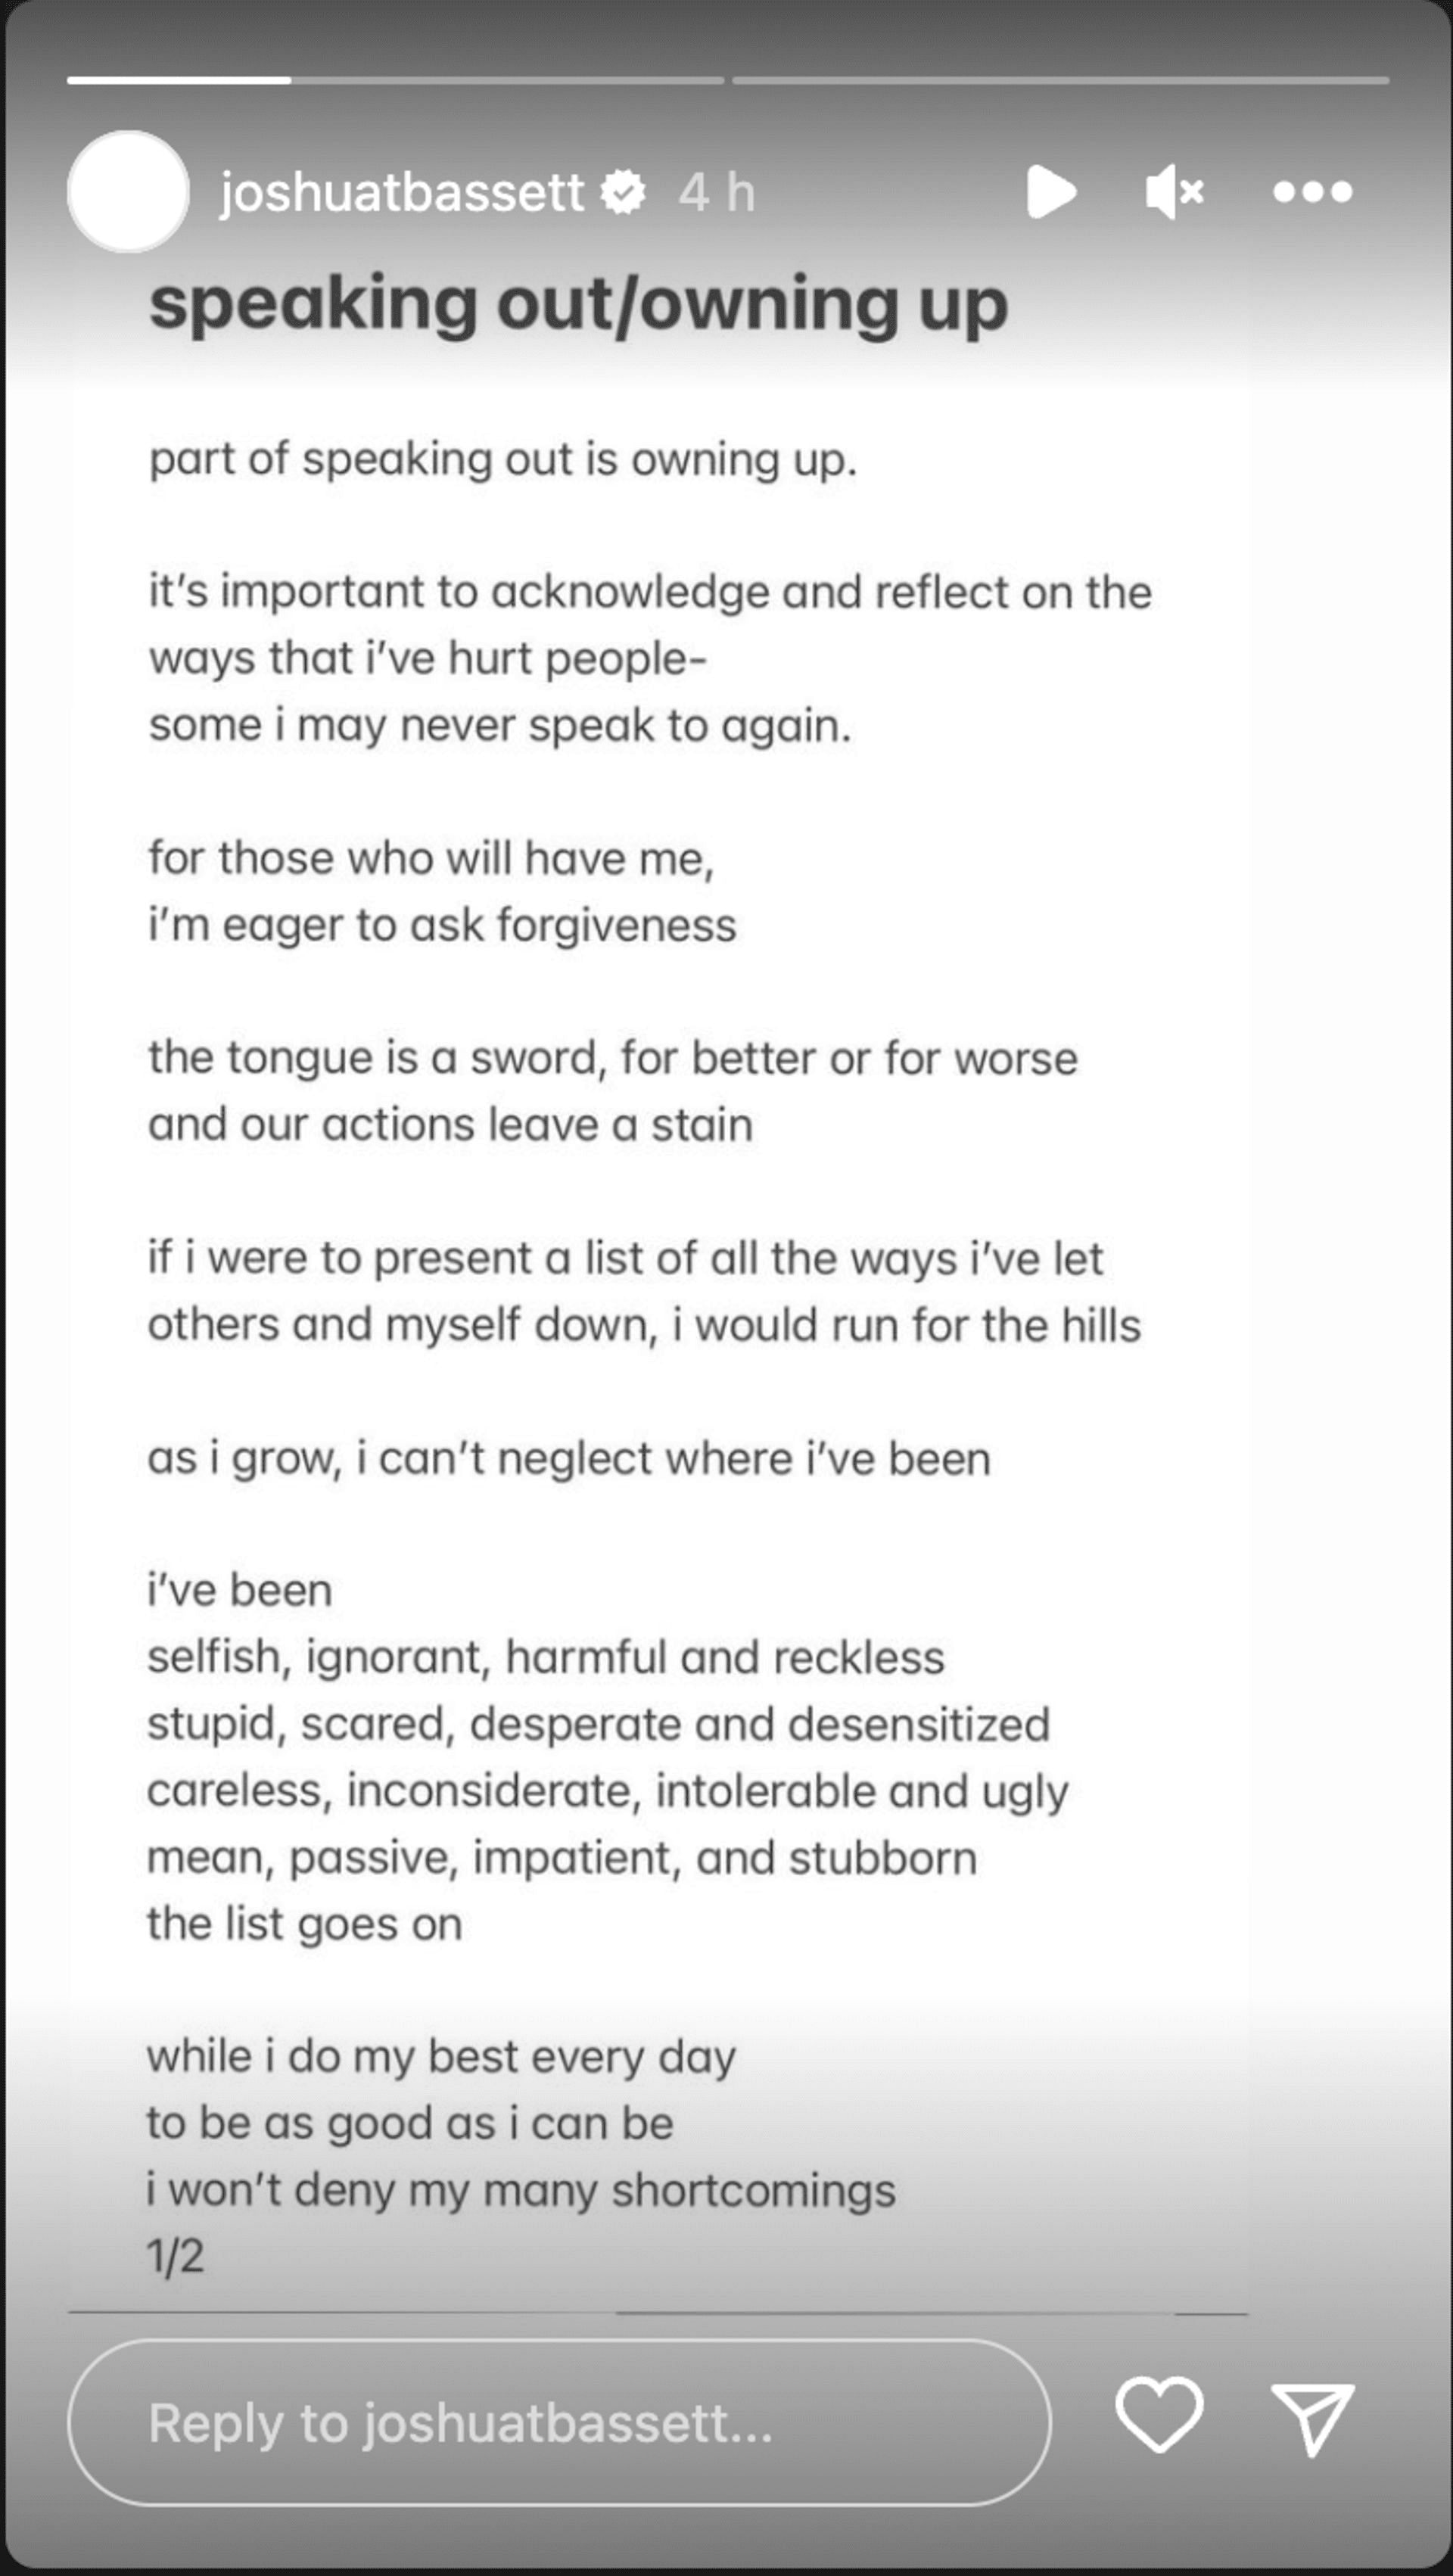 Bassett posted an Instagram story seeking forgiveness. (Image via Instagram)